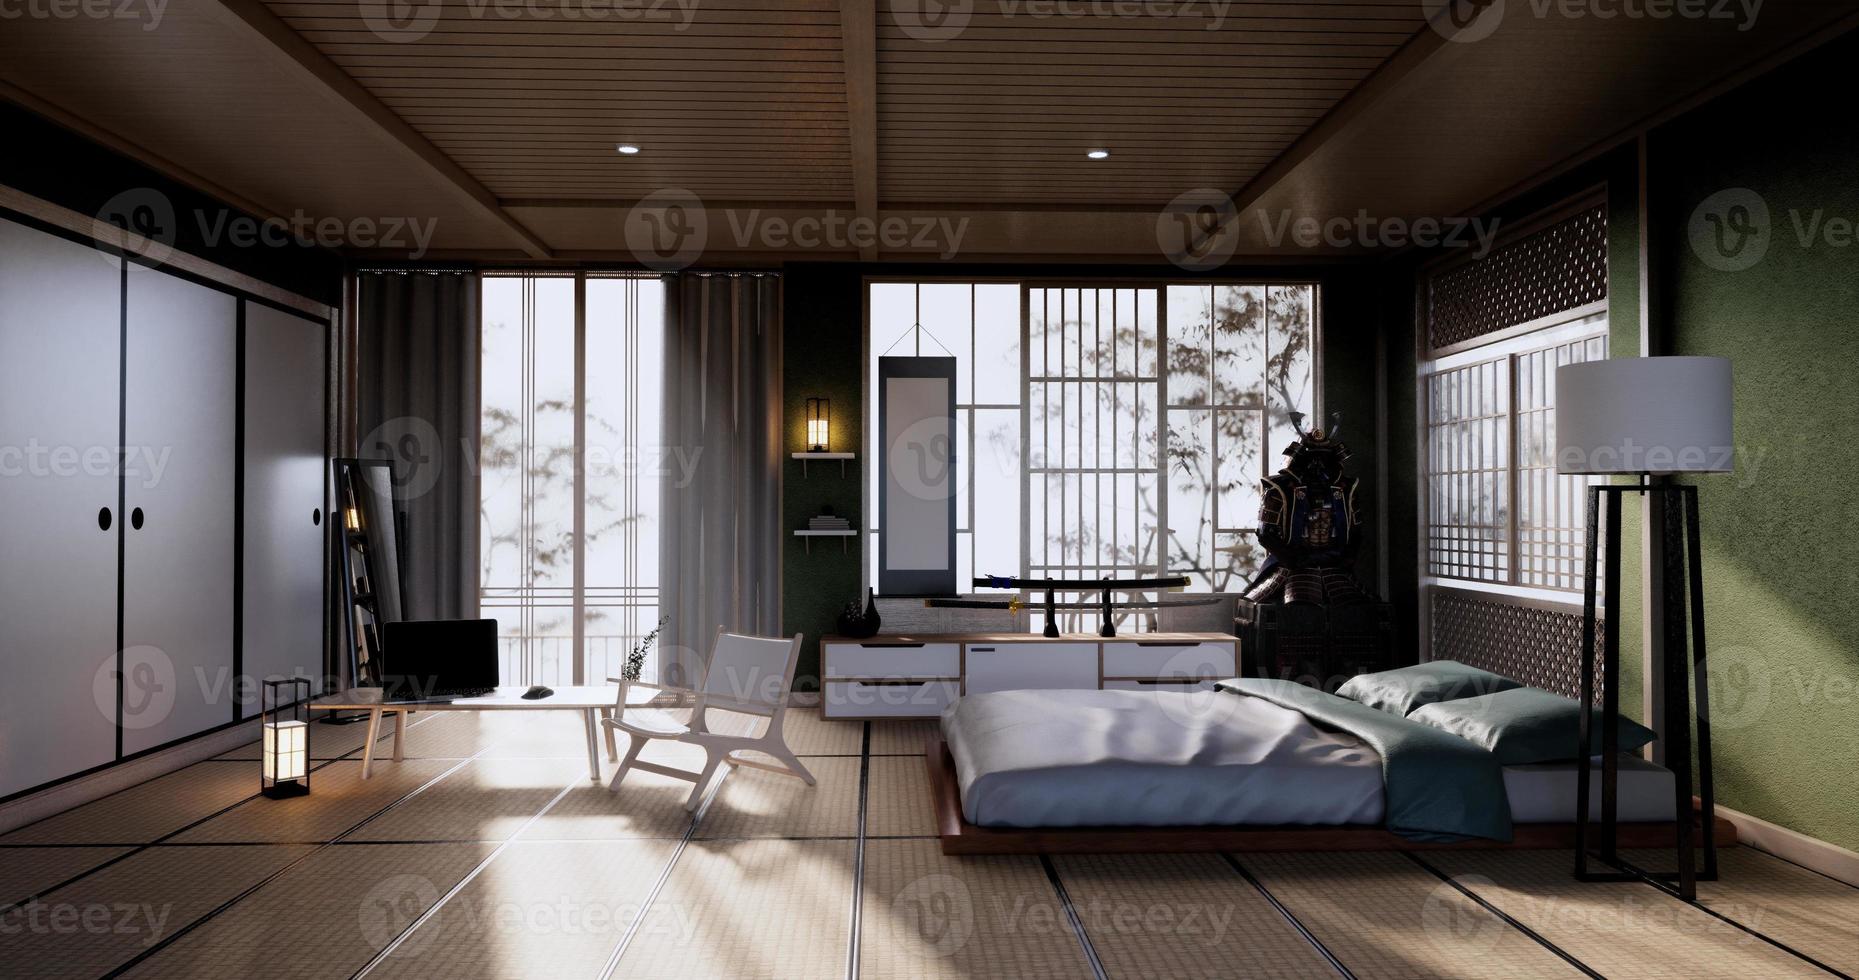 slaapkamer japanse minimalistische stijl., moderne groene muur en houten vloer, kamer minimalistisch. 3D-rendering foto